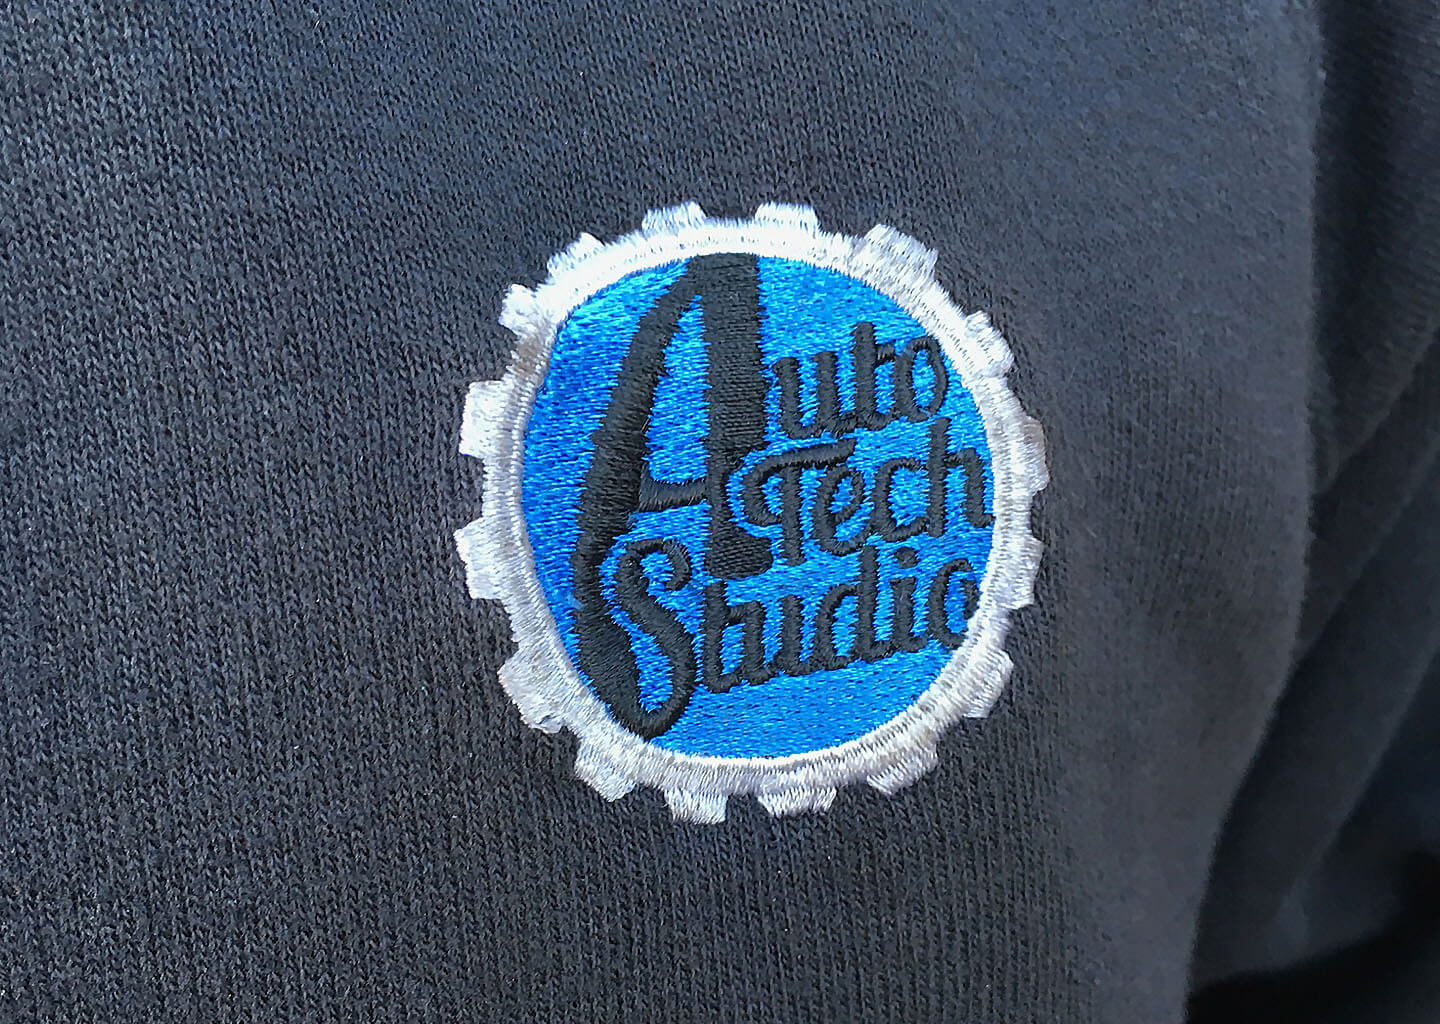 Auto Tech Studio logo